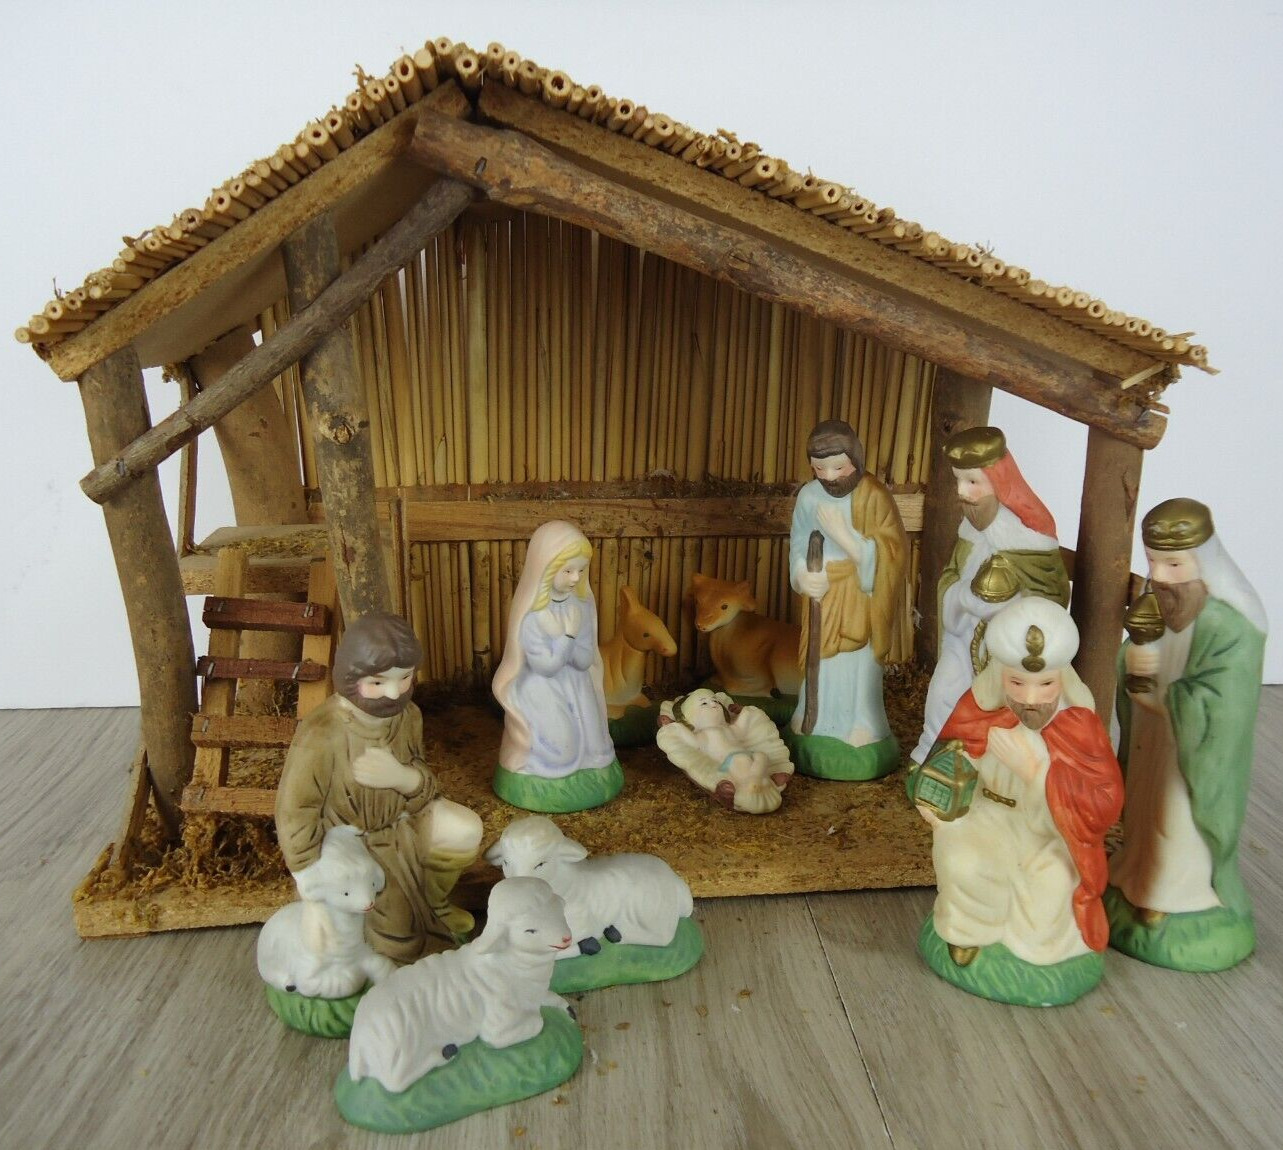 VTG Sears Nativity Set 97930 11 Porcelain Figures Stable Christmas Decor Holiday